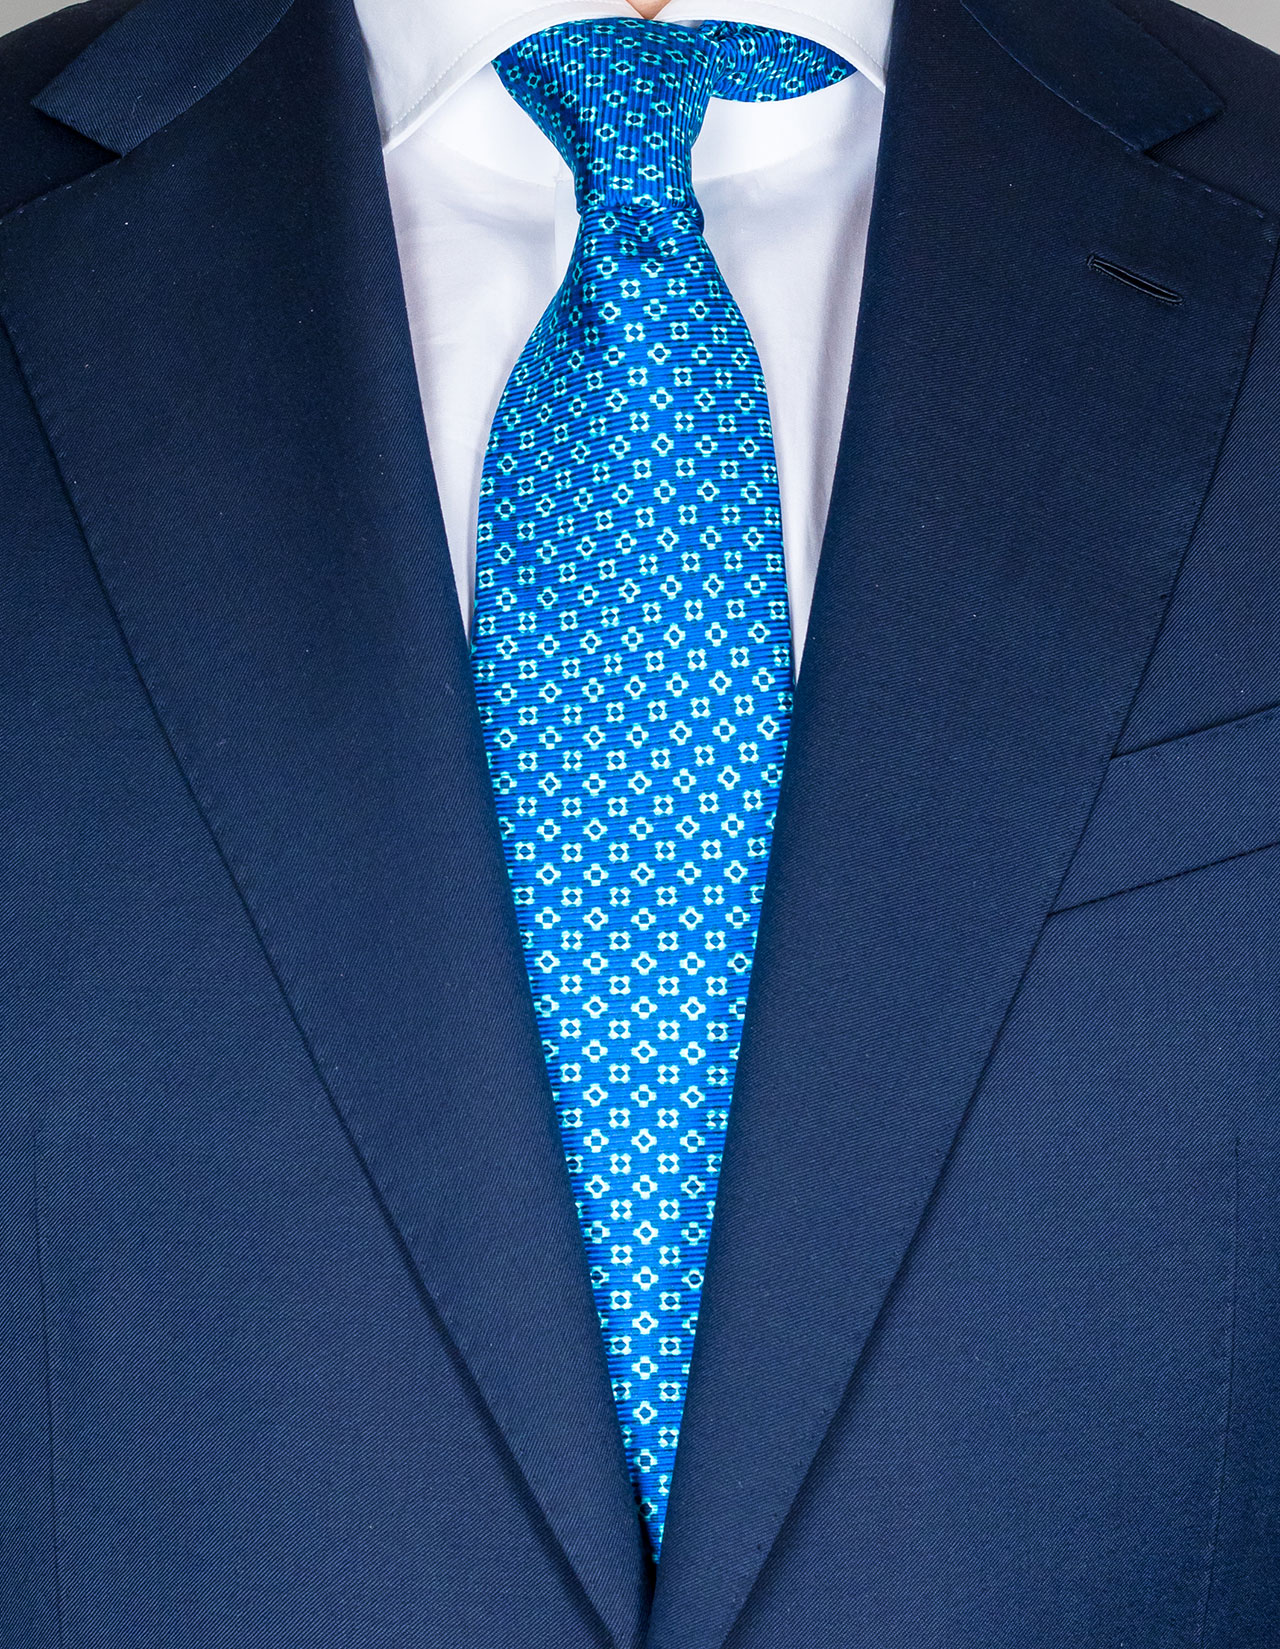 Kiton Krawatte in blau mit hellblau-weiß-dunkelblauem Muster